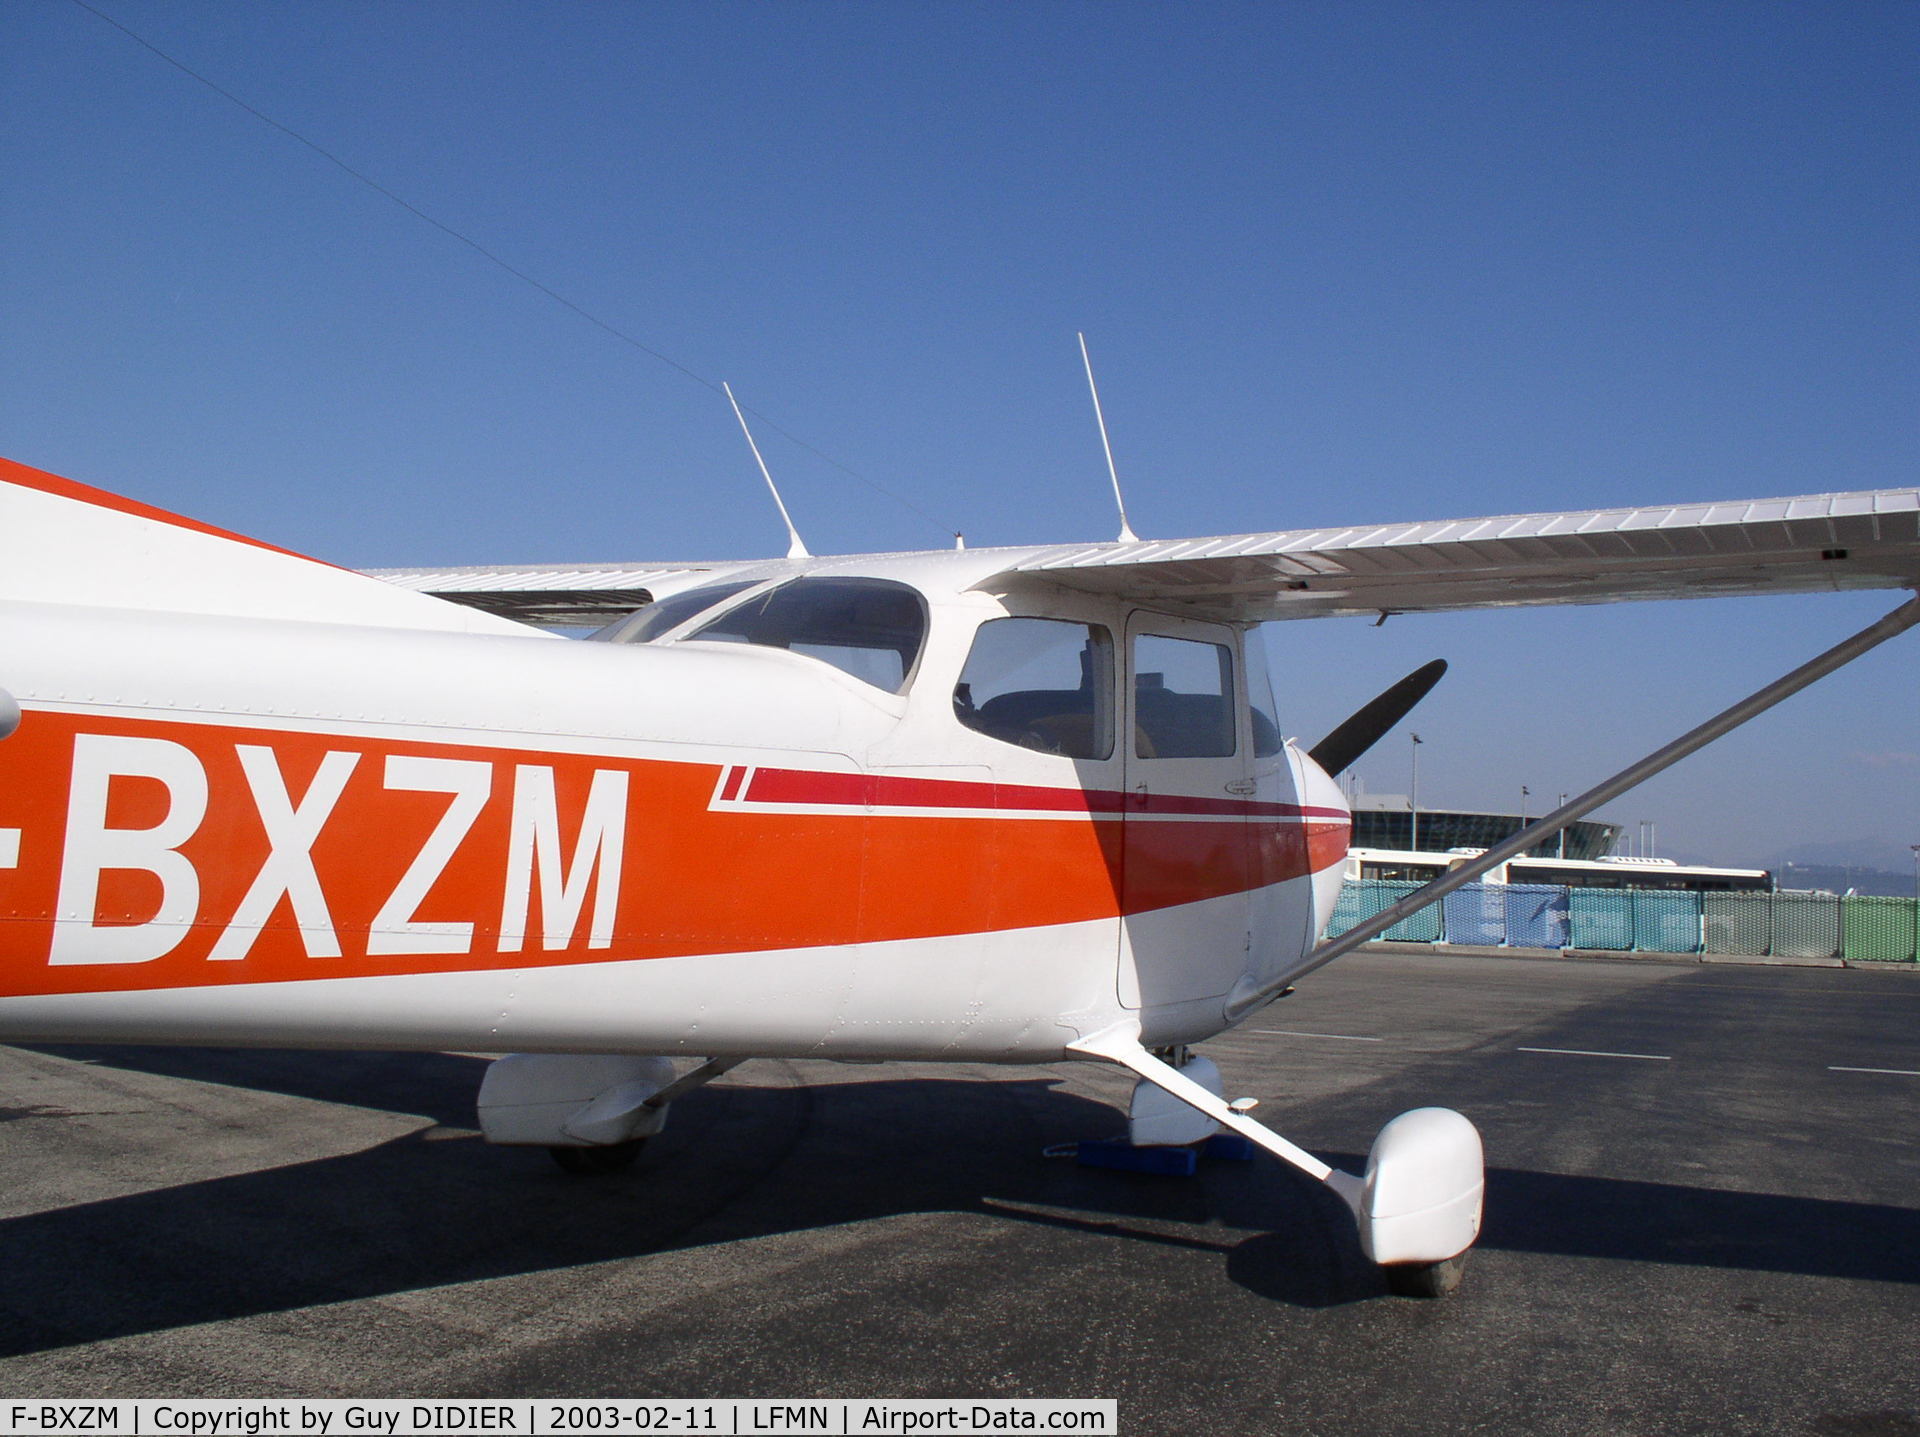 F-BXZM, Reims F172M Skyhawk Skyhawk C/N 1247, Cessna 172M at Nice Cote d'Azur Airport - France